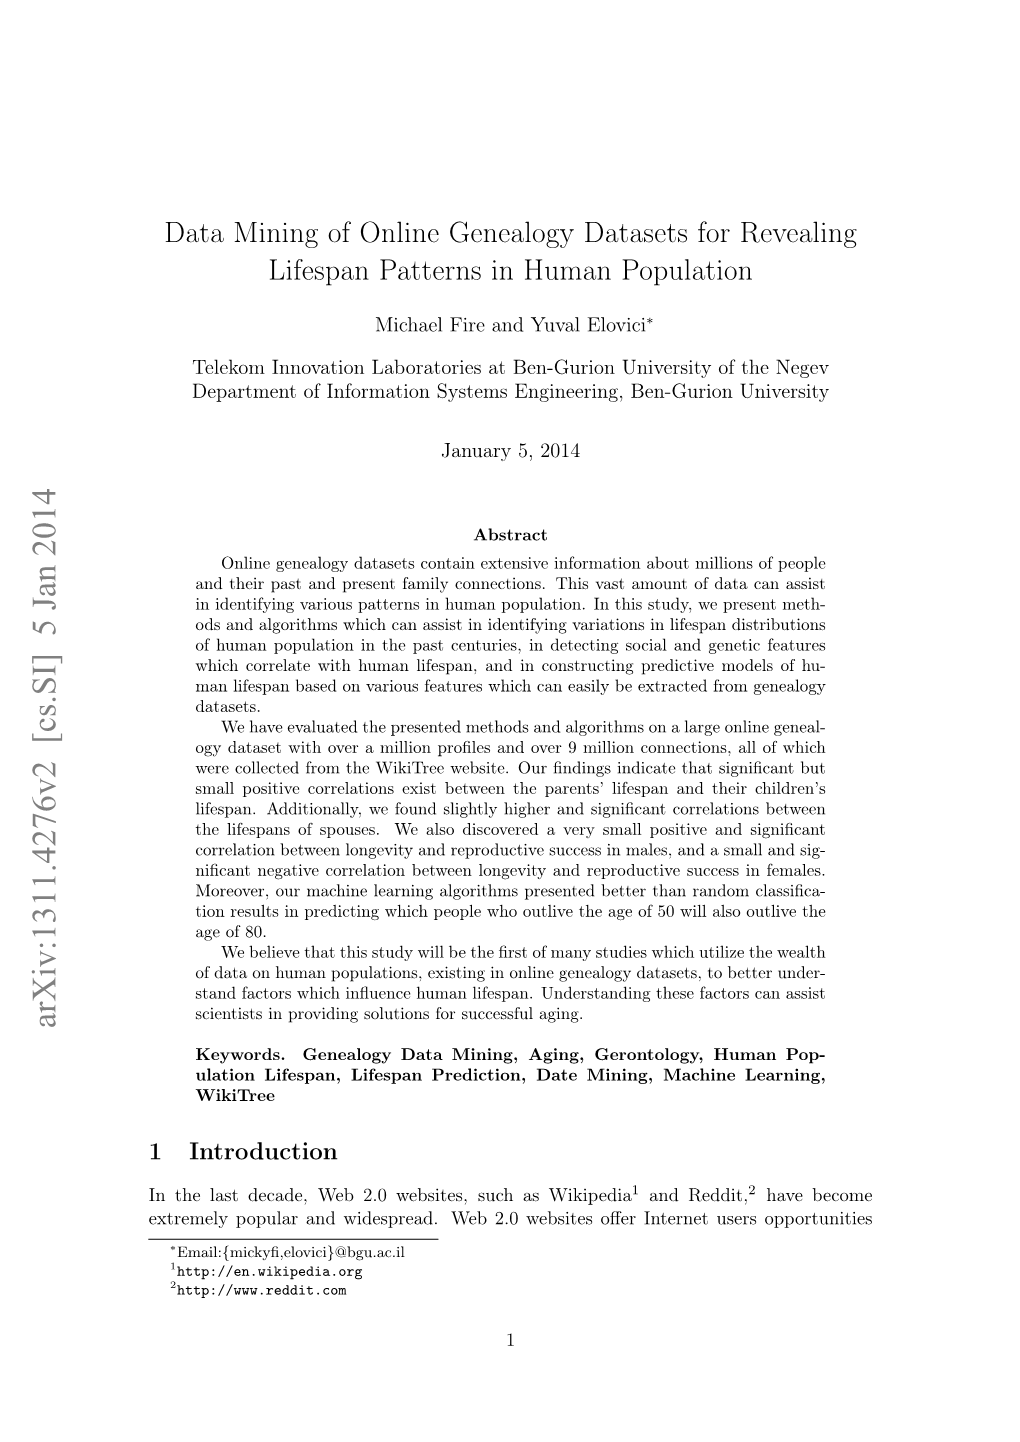 Data Mining of Online Genealogy Datasets for Revealing Lifespan Patterns in Human Population